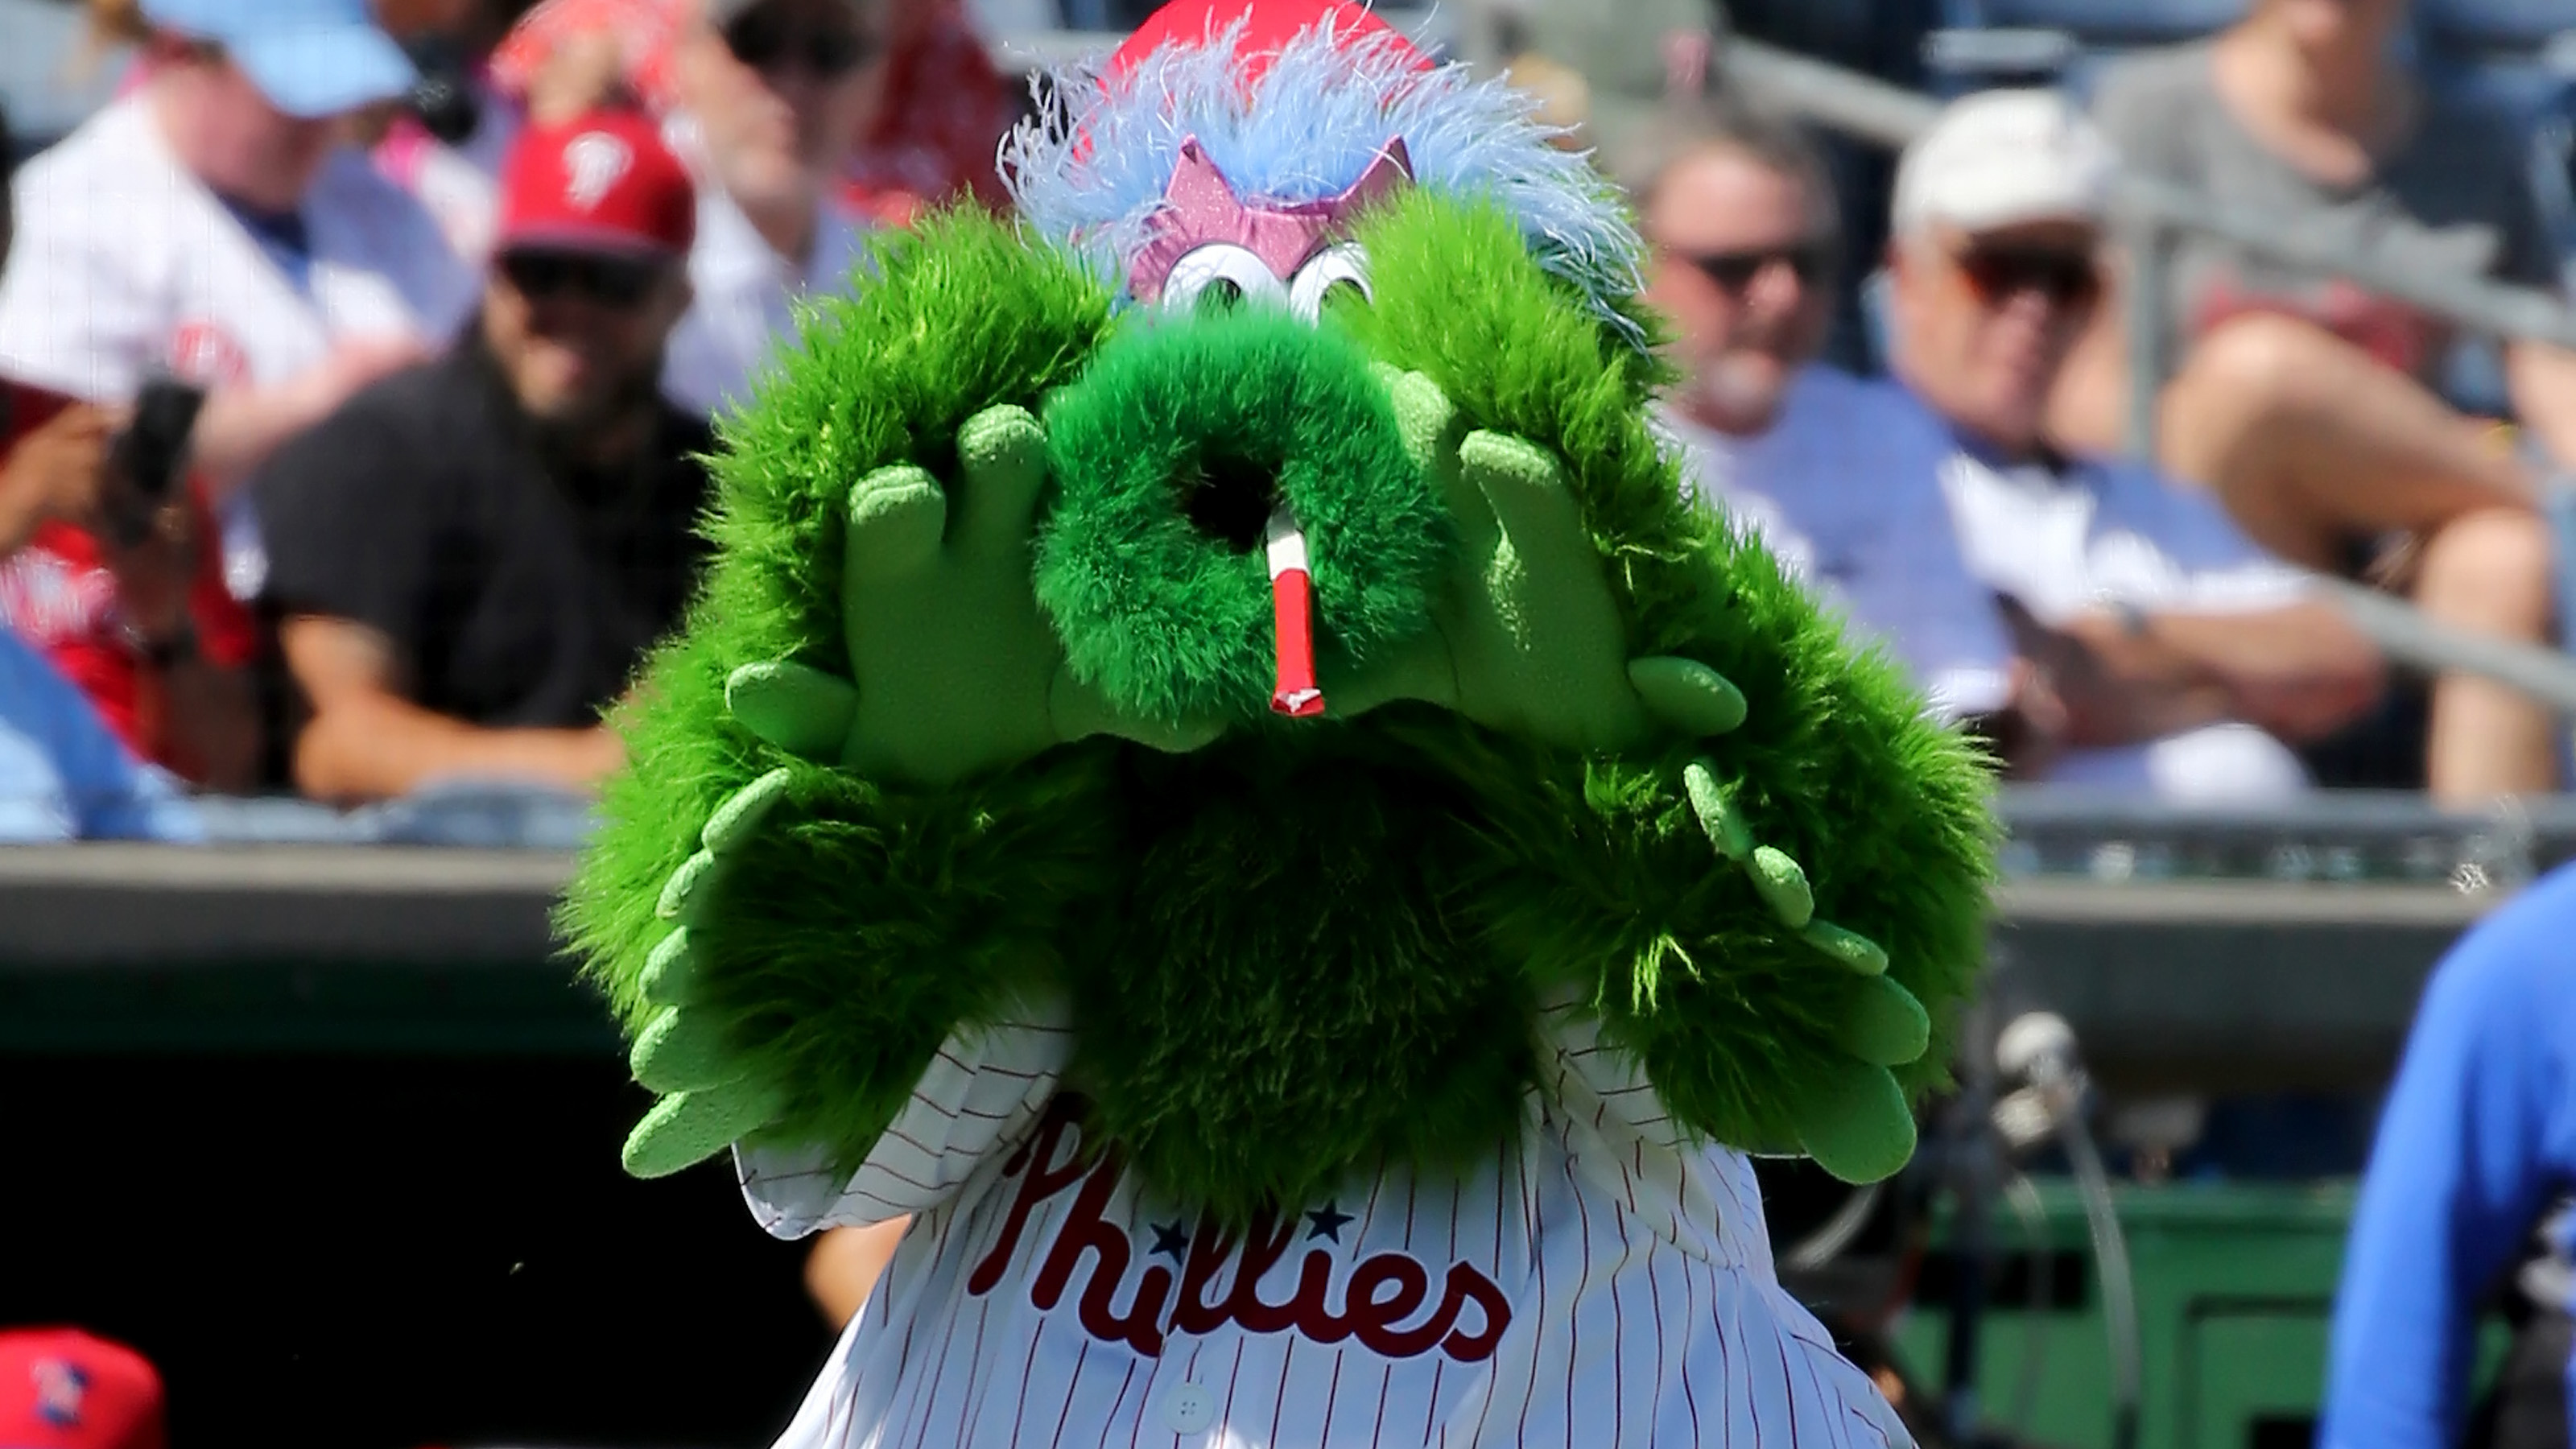 Meet the World Series mascots: The Phillie Phanatic and Orbit